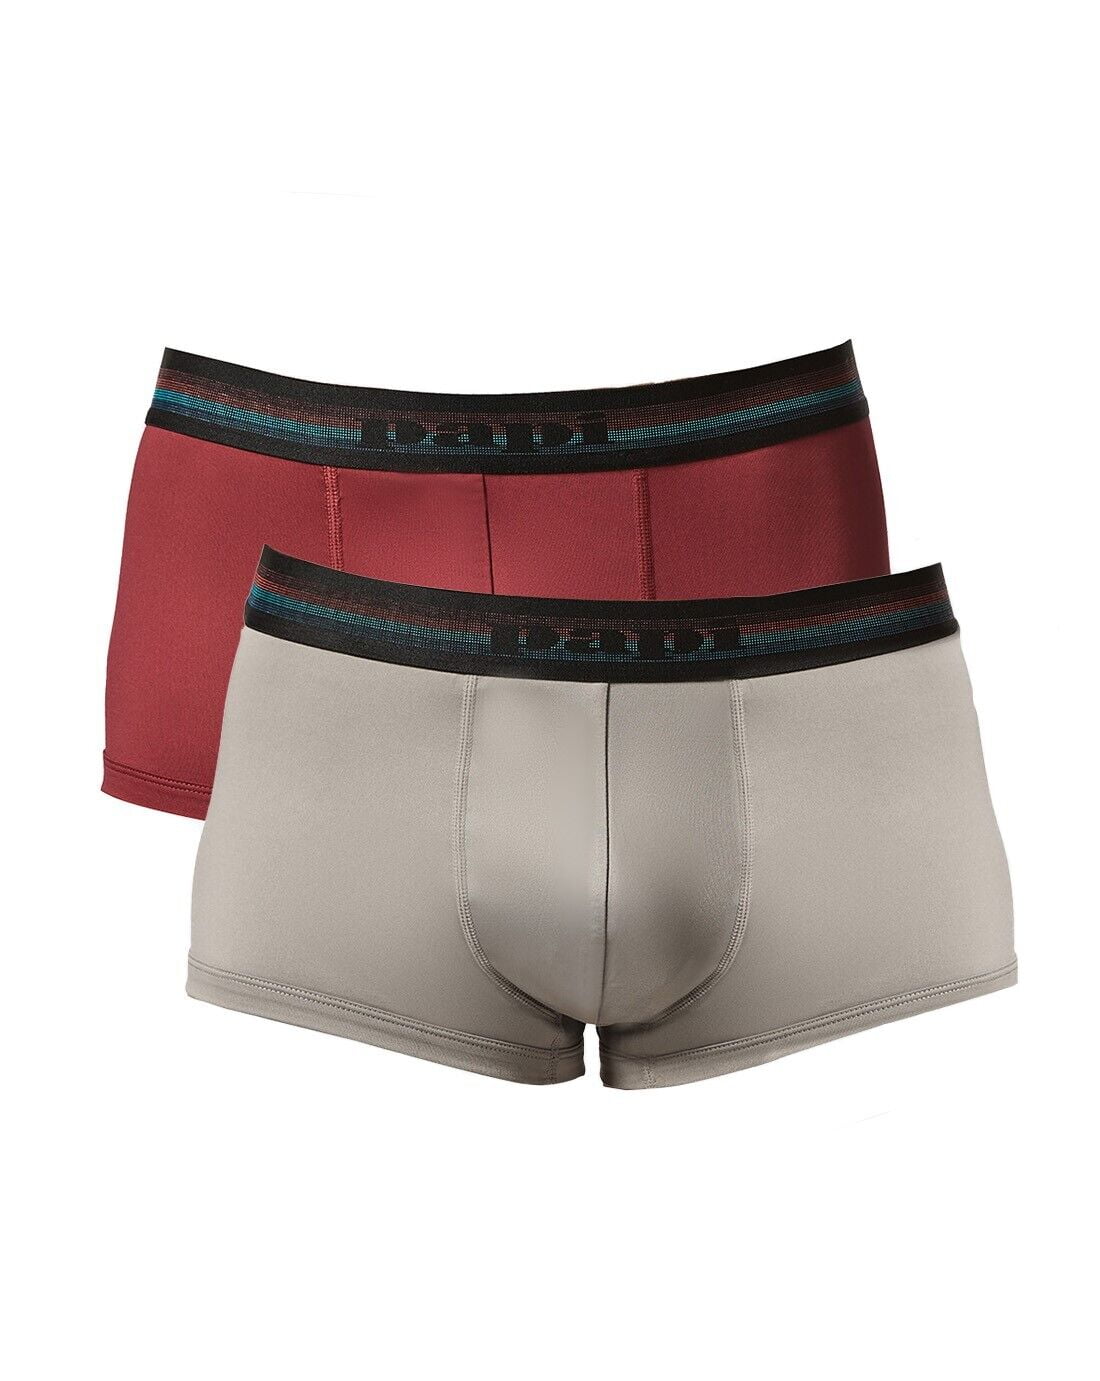 Papi 2-Pack Brazilian Trunk Underwear - UMPA107 (Chiseled Stone/Beet Red,  XL)